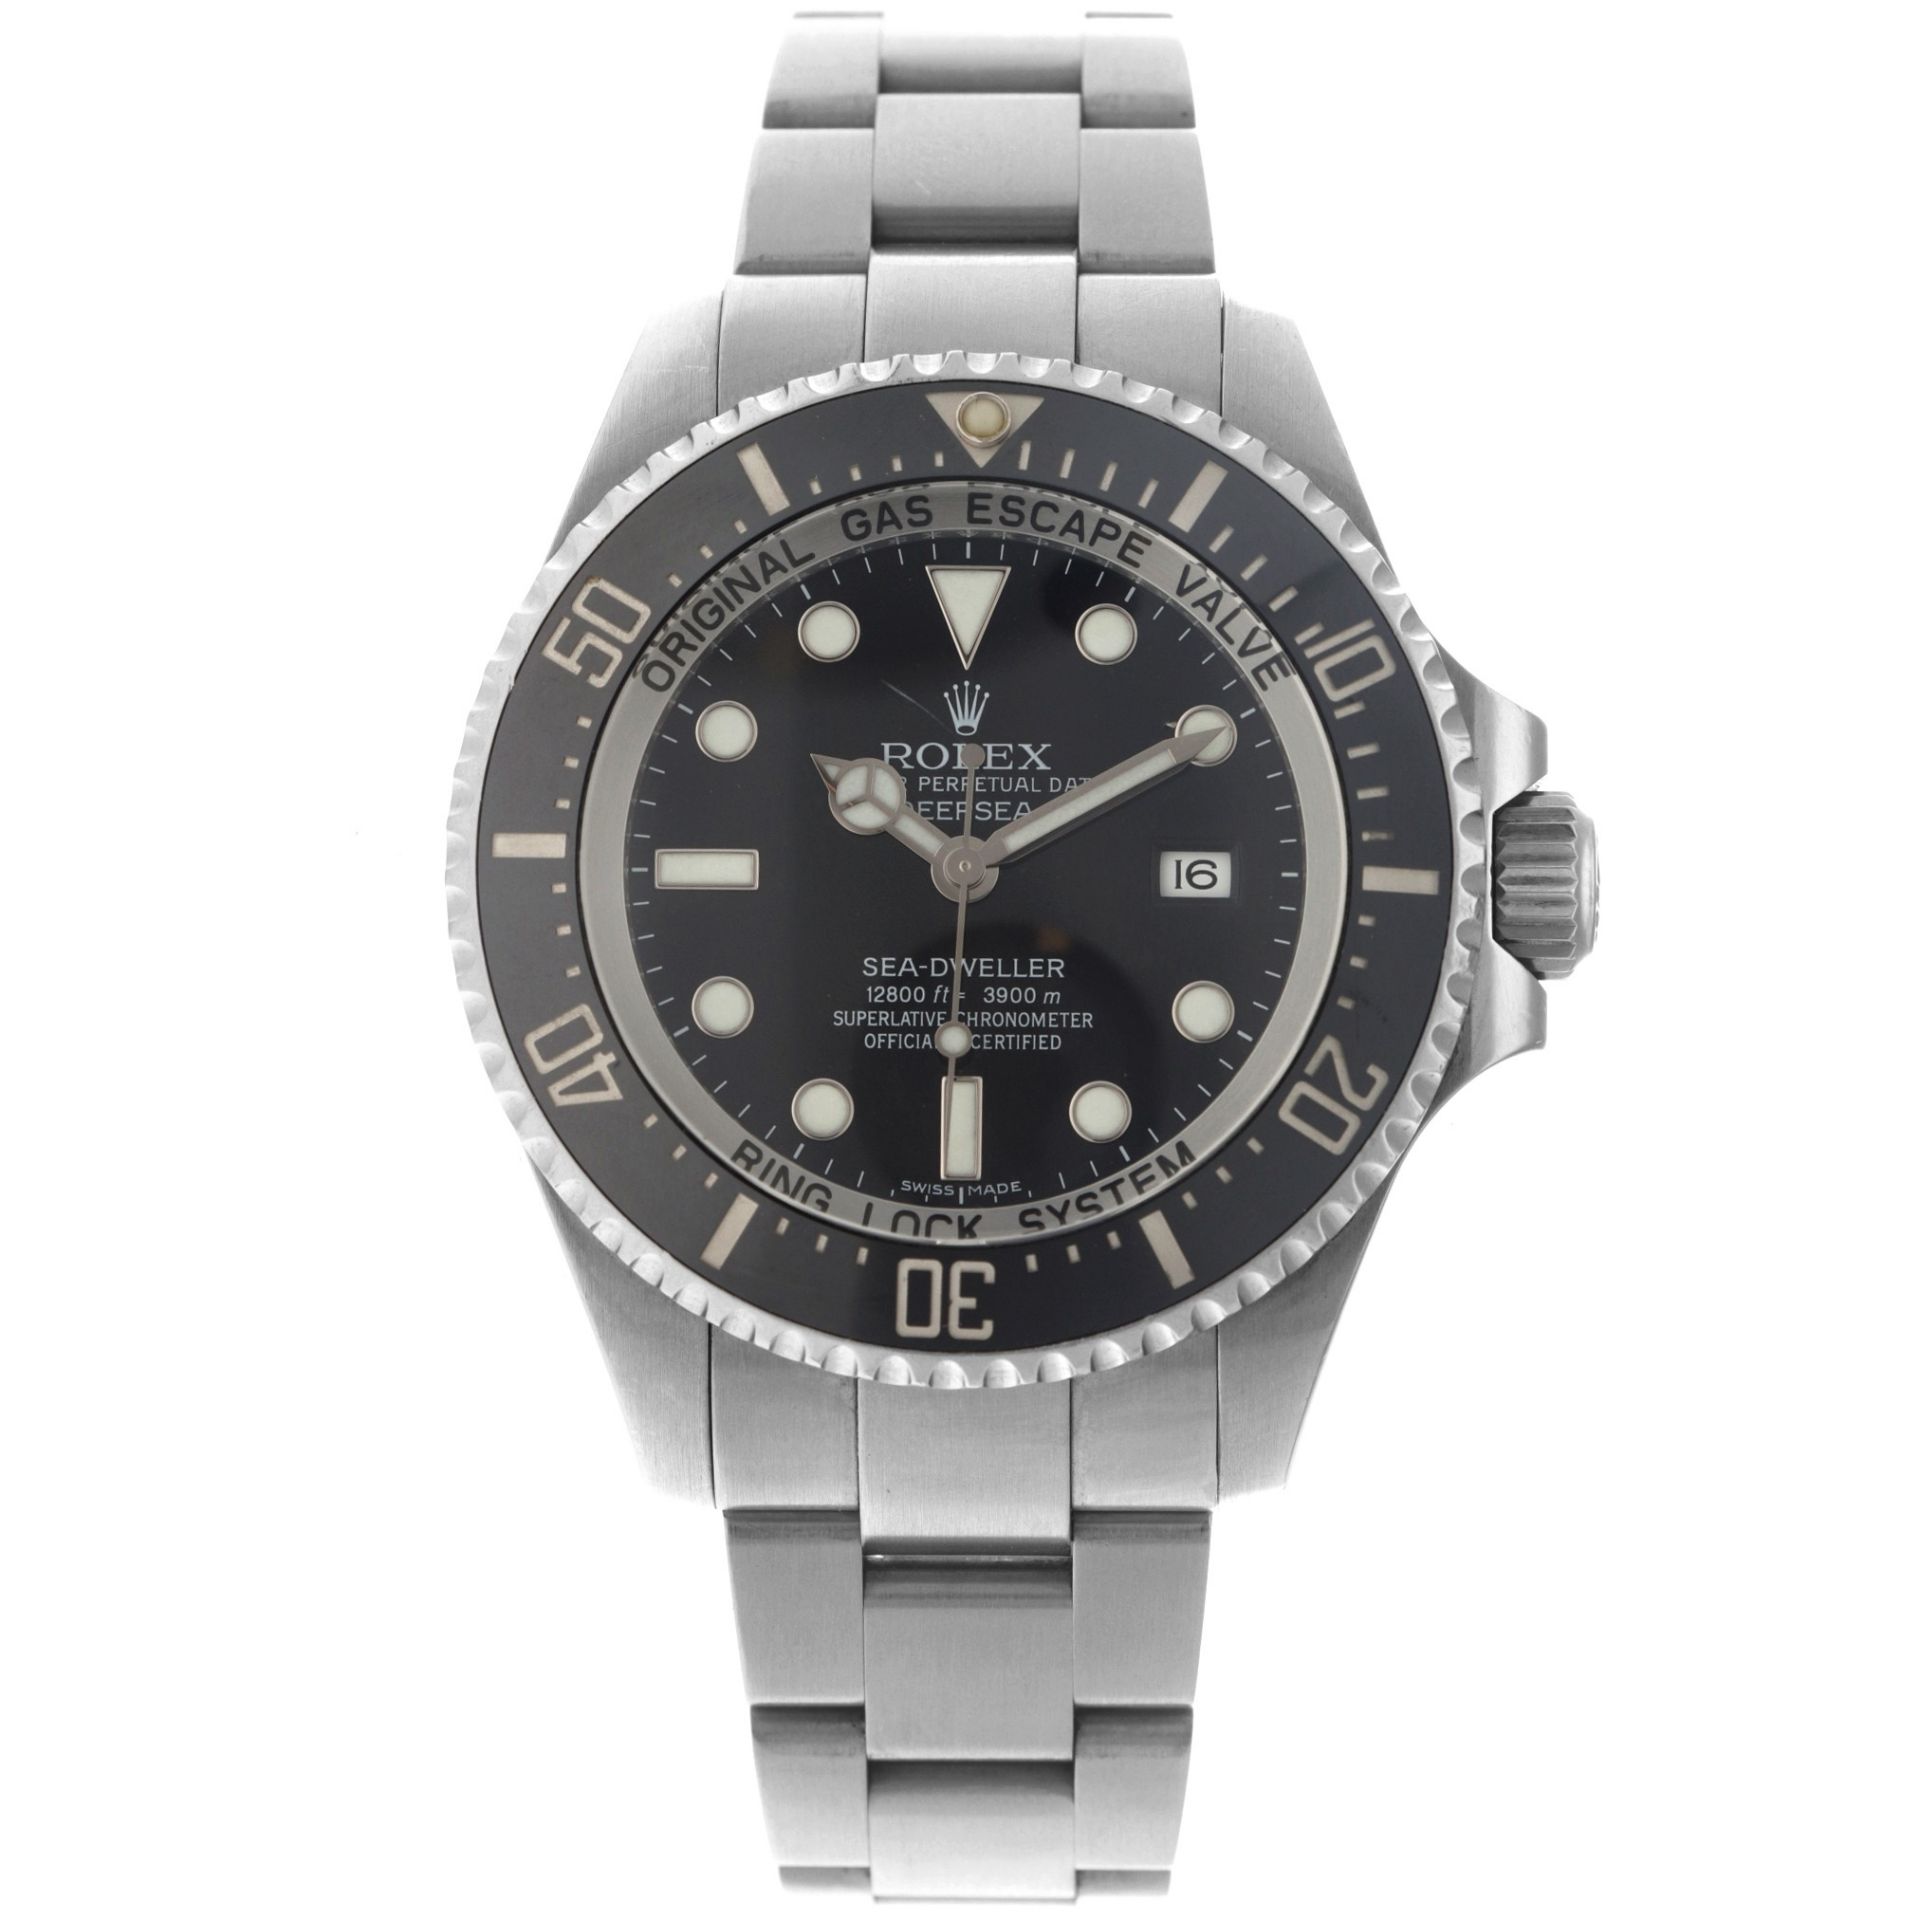 No Reserve - Rolex Sea-Dweller Deepsea 116660 - Men's watch - approx. 1991.